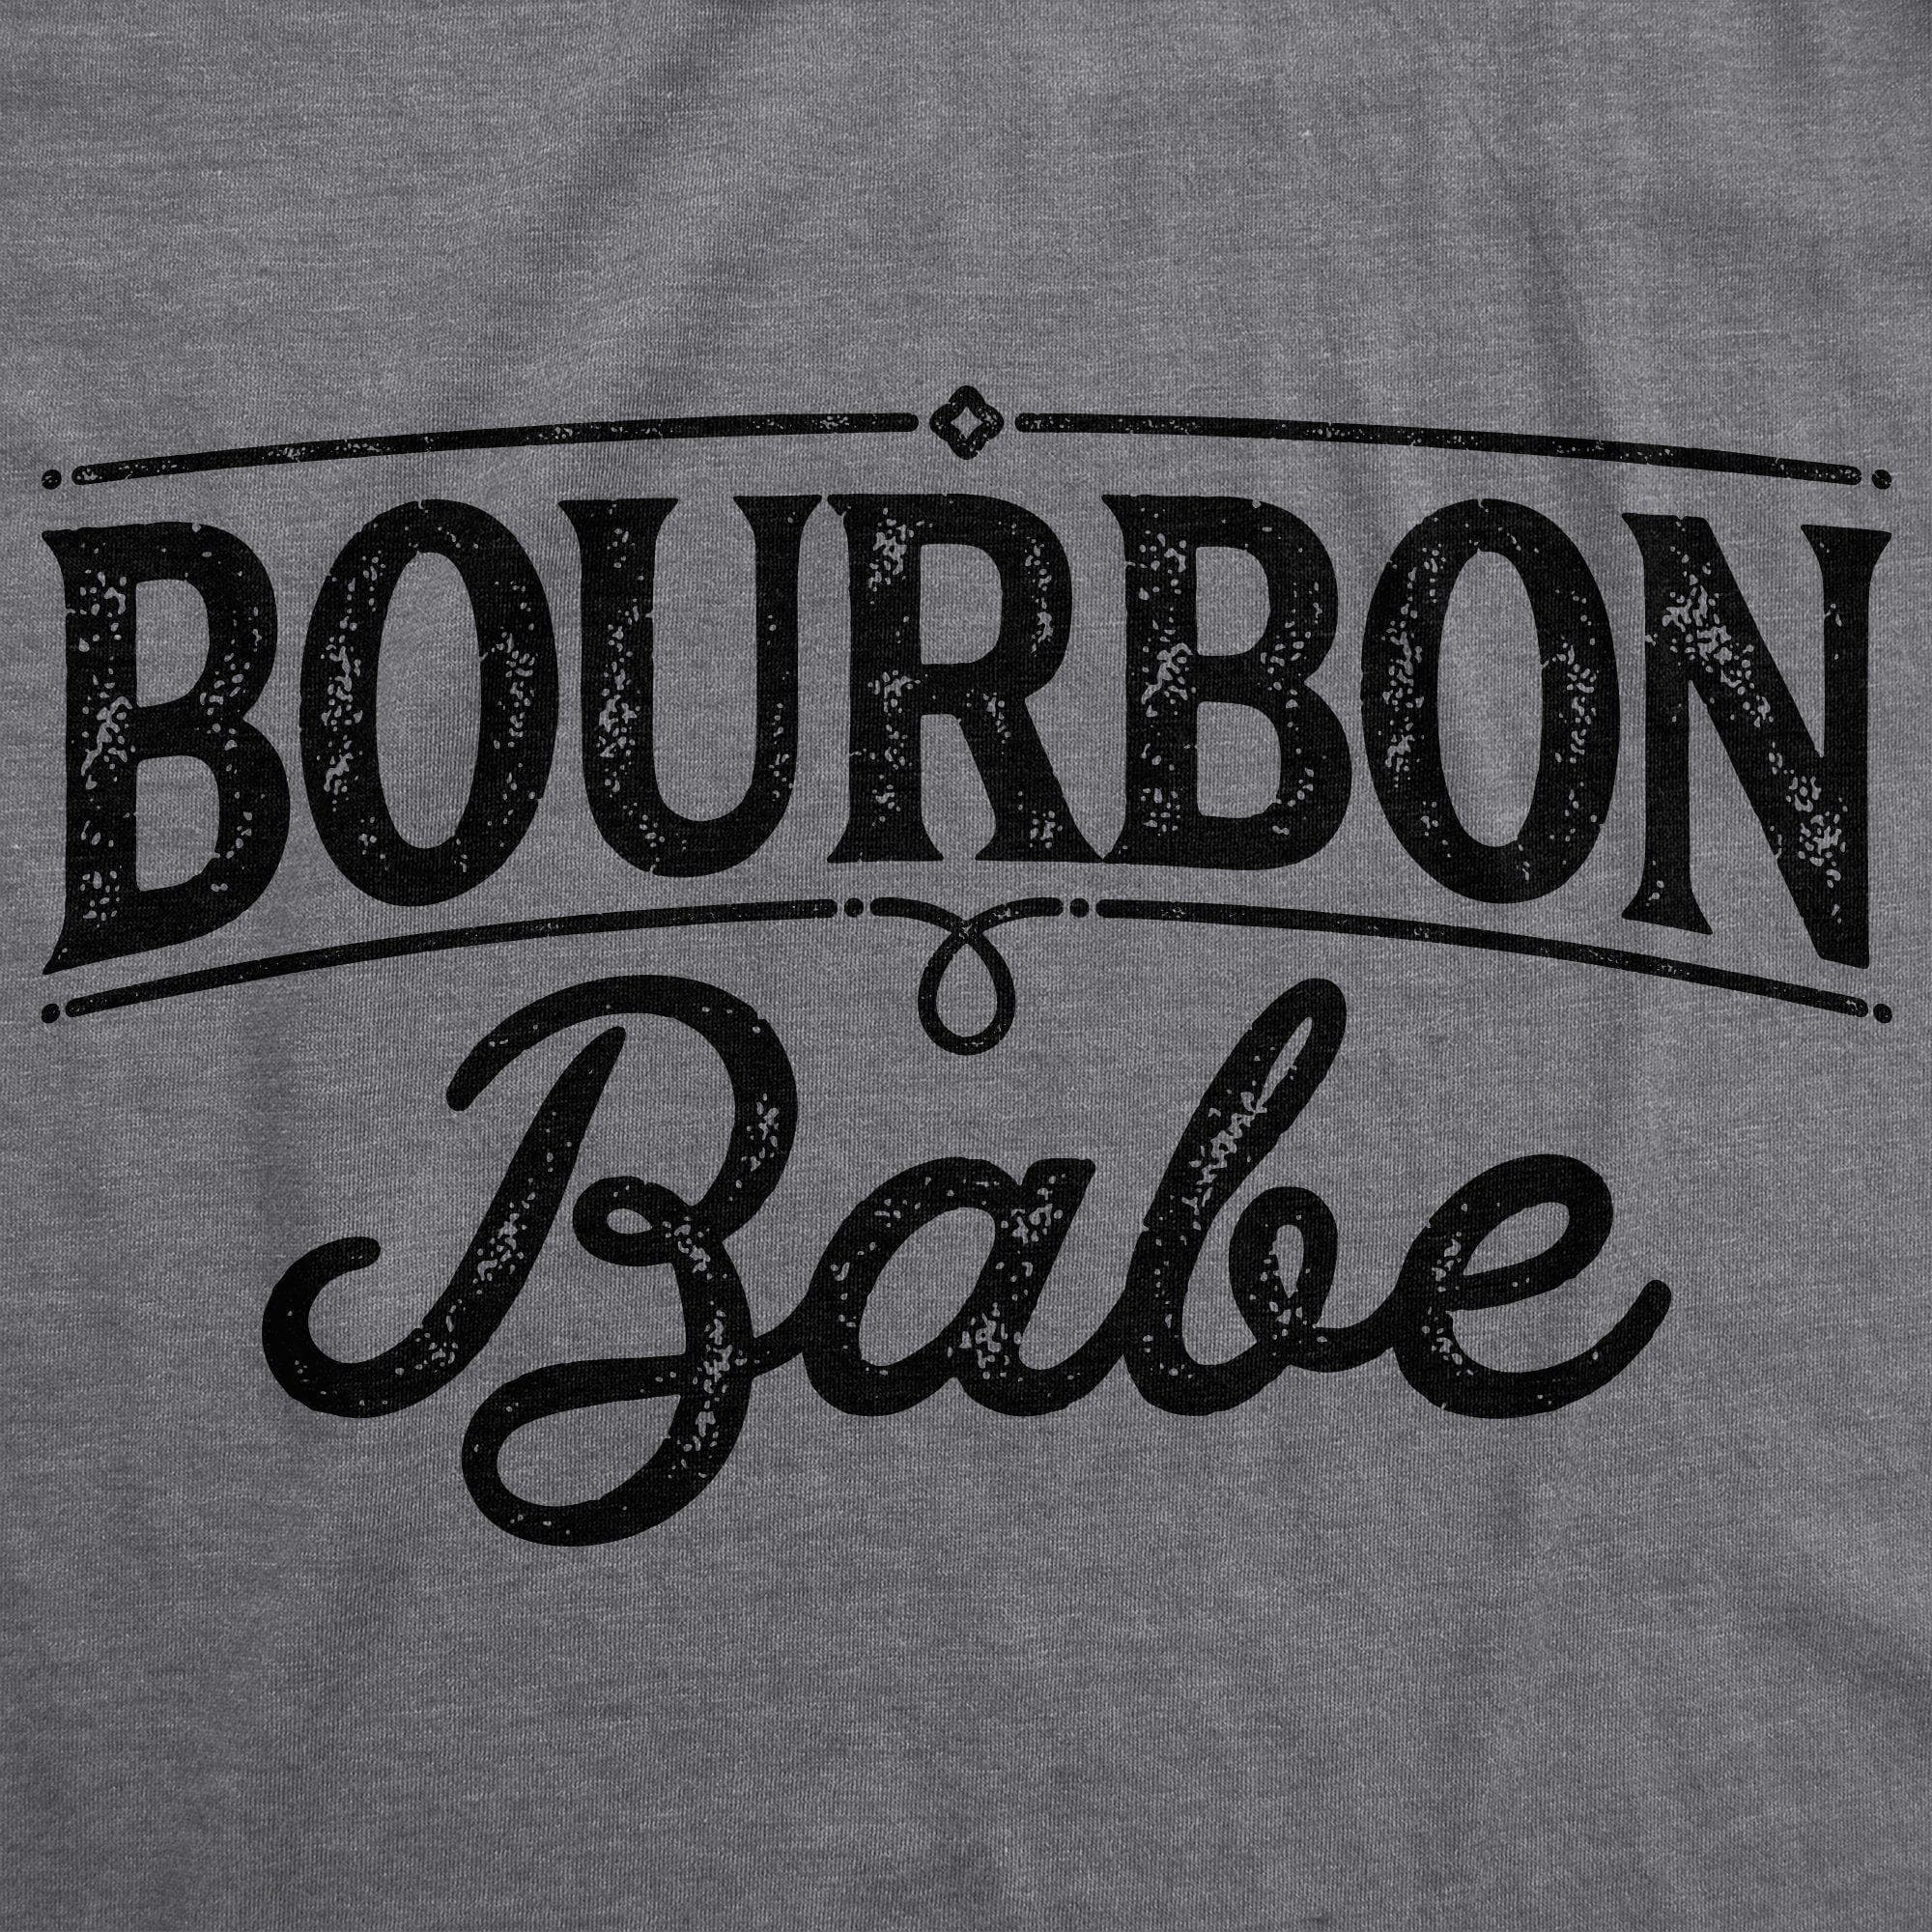 Bourbon Babe Women's Tshirt - Crazy Dog T-Shirts